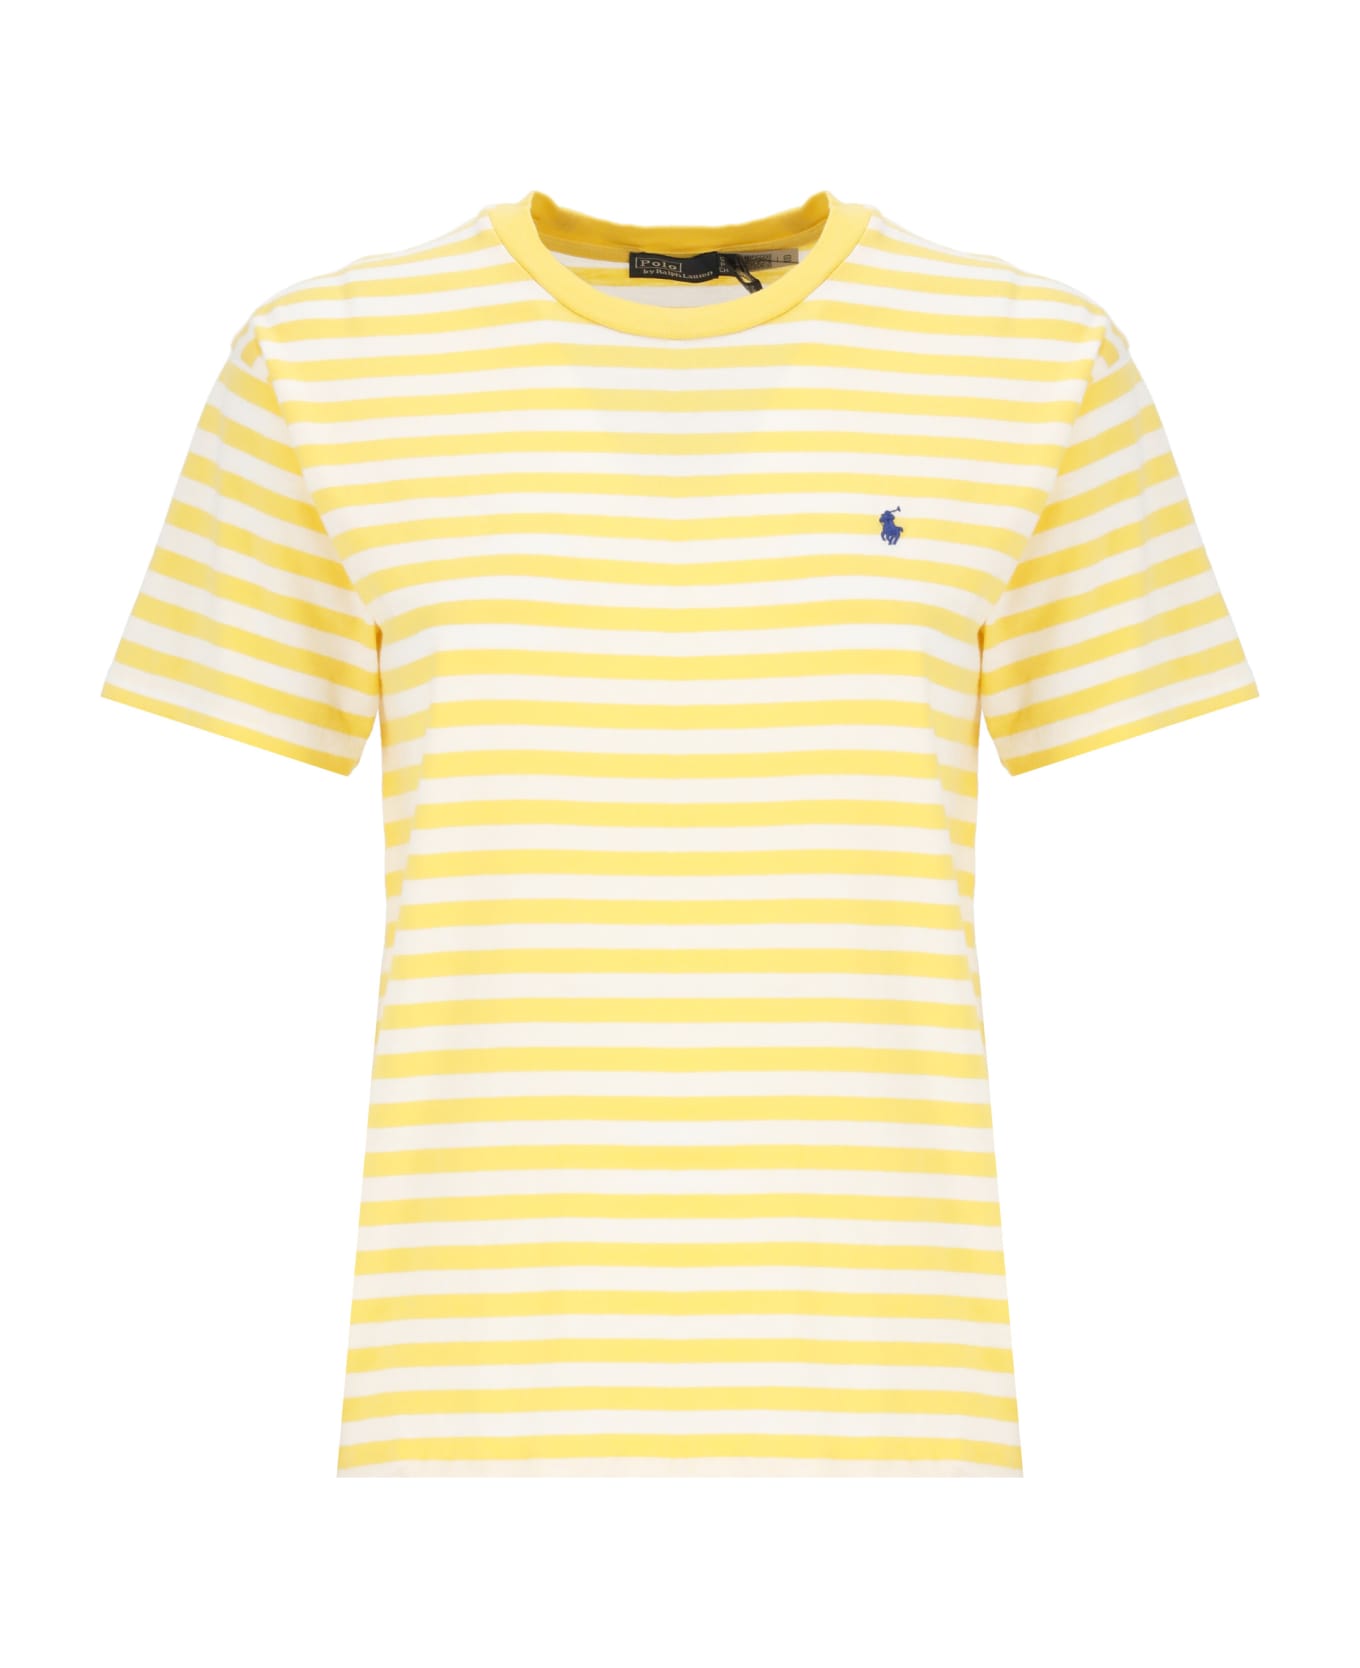 Ralph Lauren Pony T-shirt - Yellow